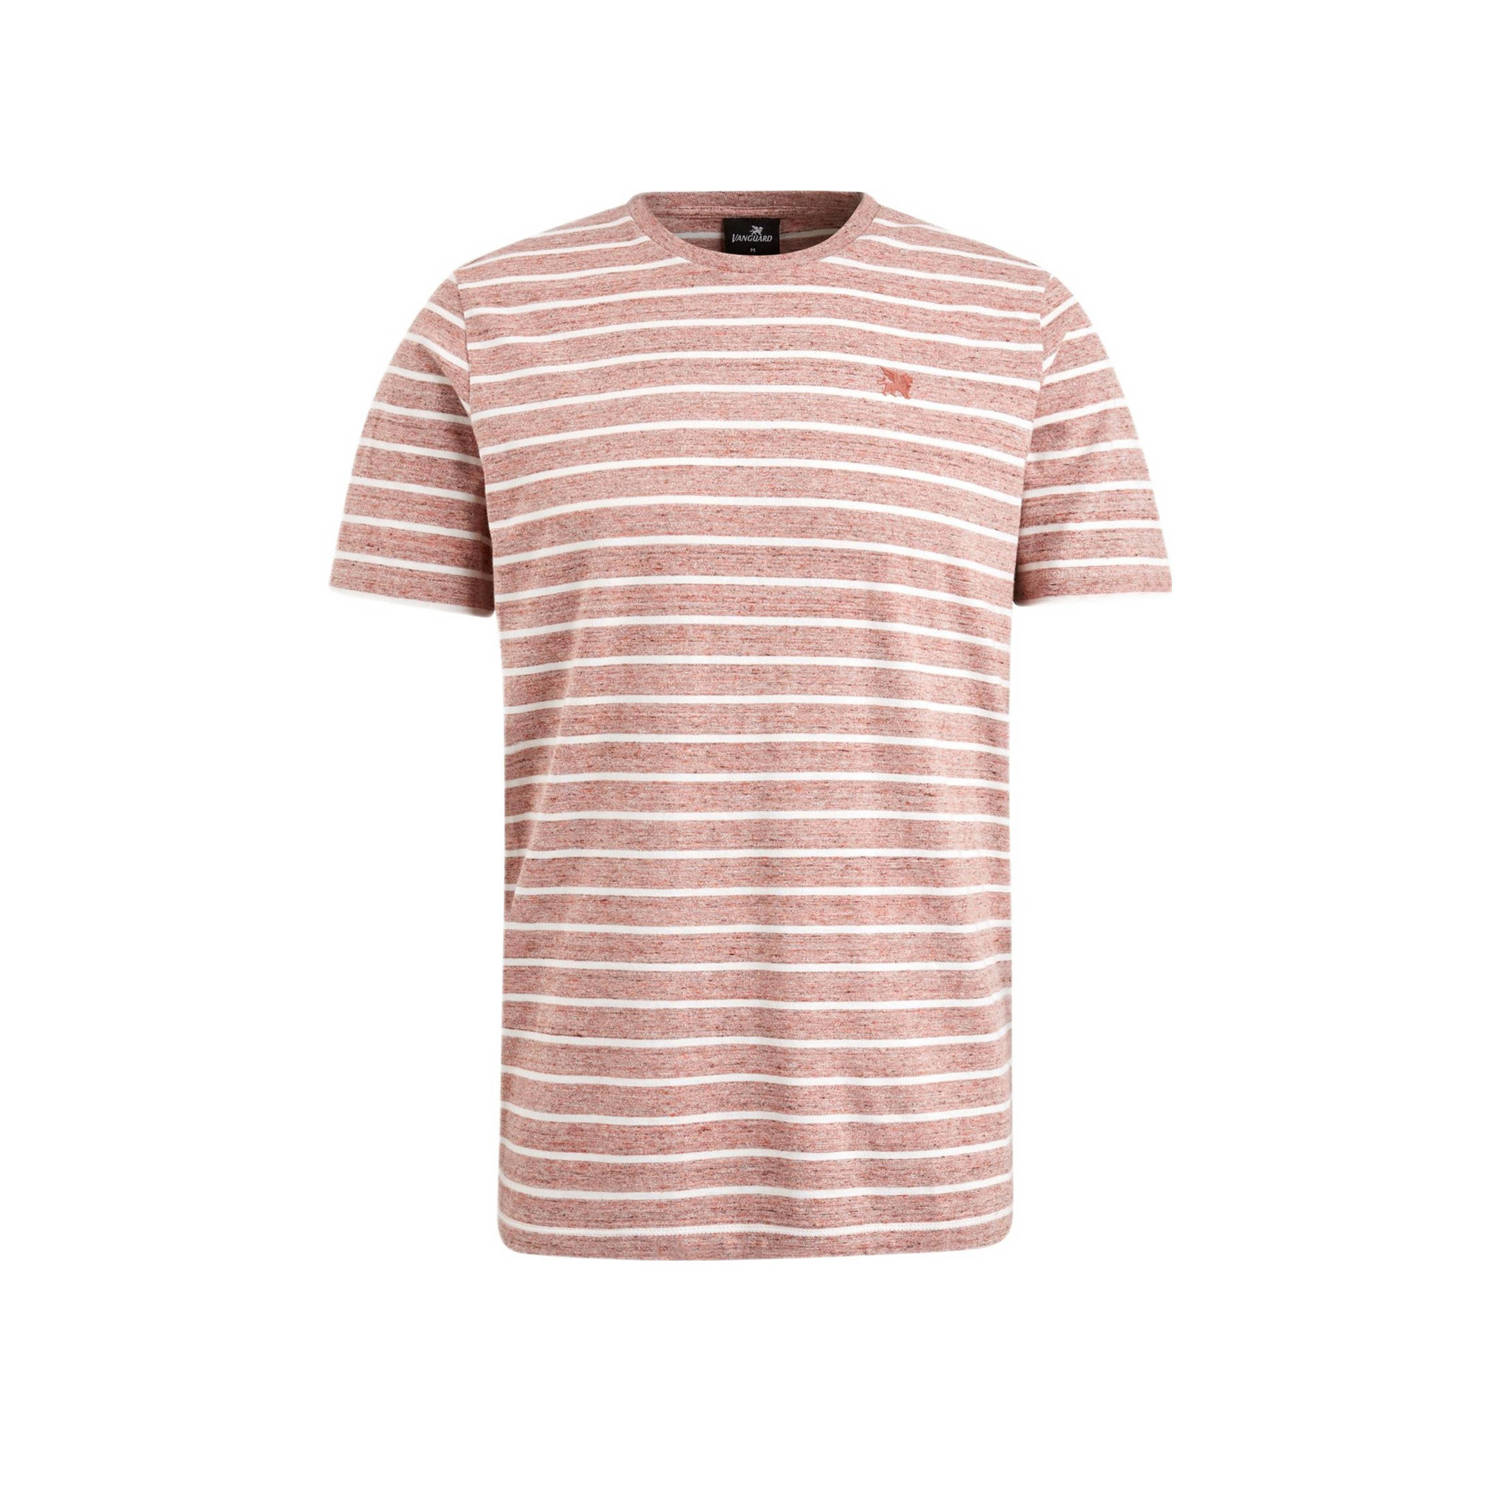 Vanguard gestreept regular fit T-shirt bruin roze